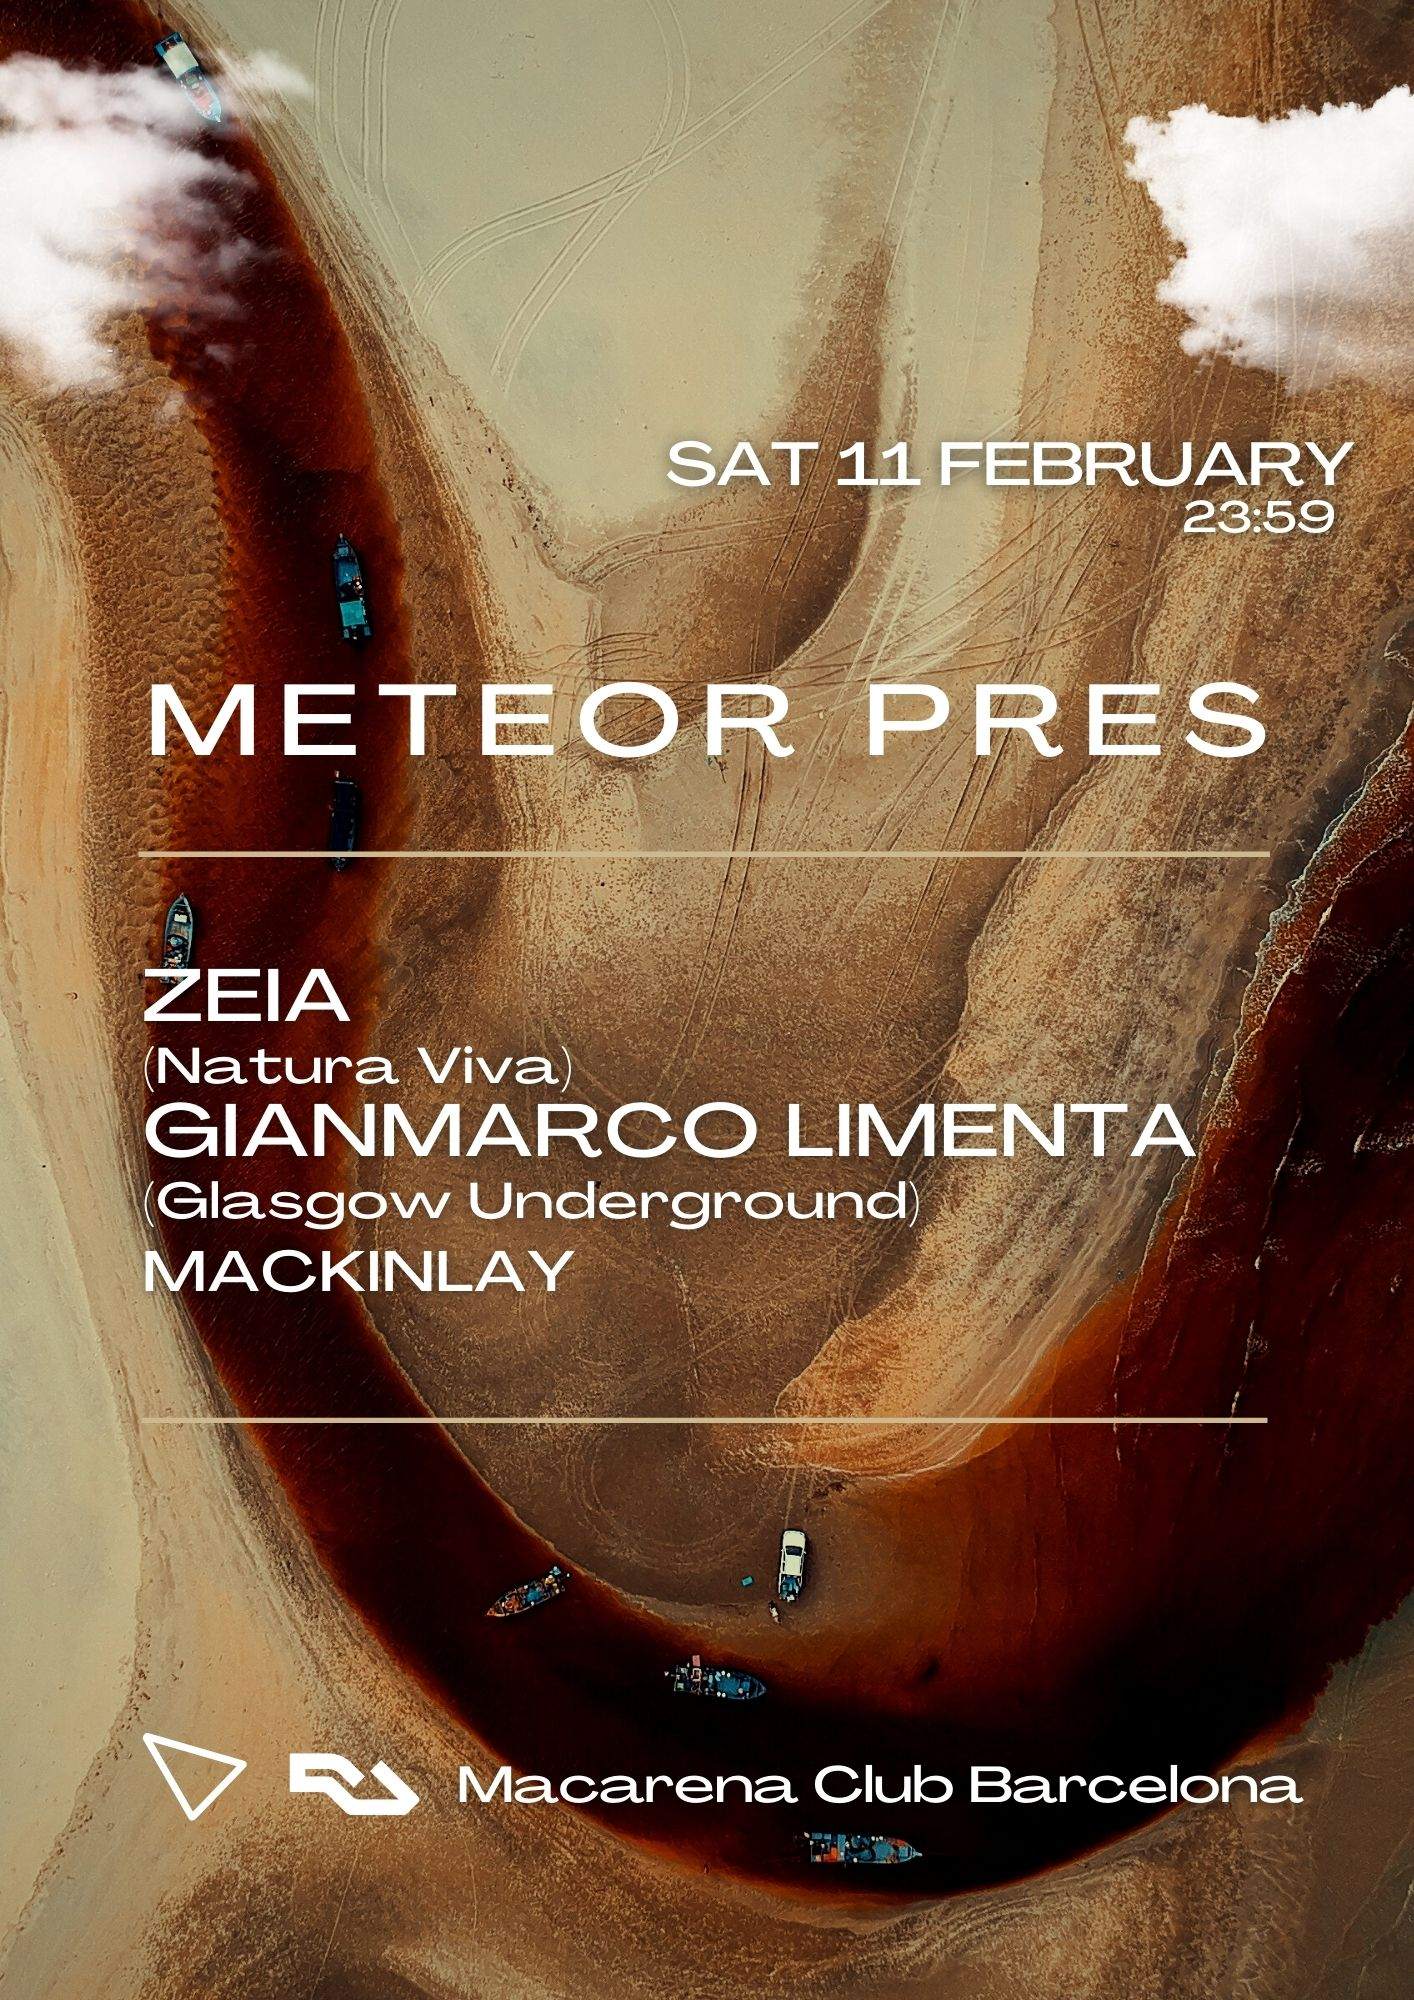 METEOR pres. ZEIA | Gianmarco Limenta | Mackinlay - フライヤー表